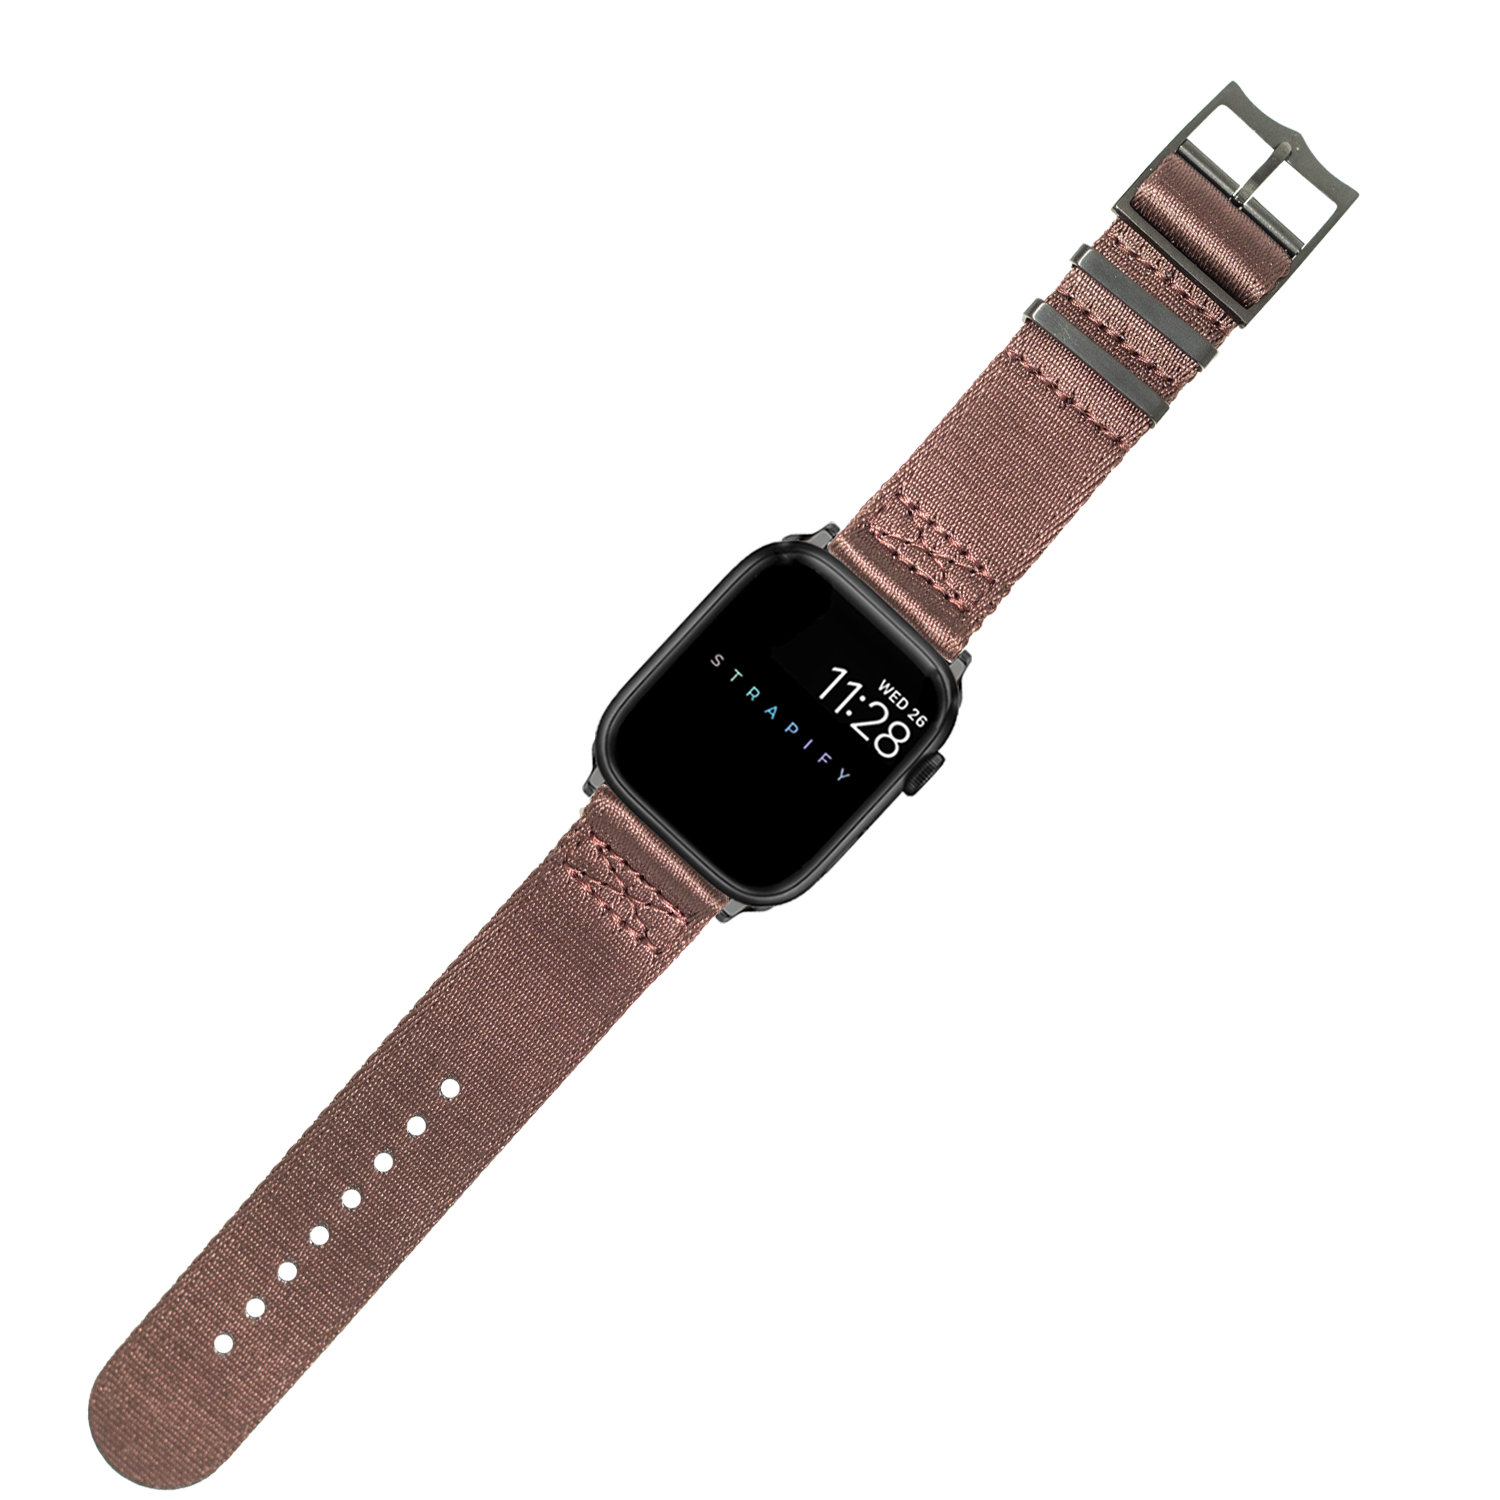 [Apple Watch] Ultra Militex - Stealth Brown [Black Hardware]